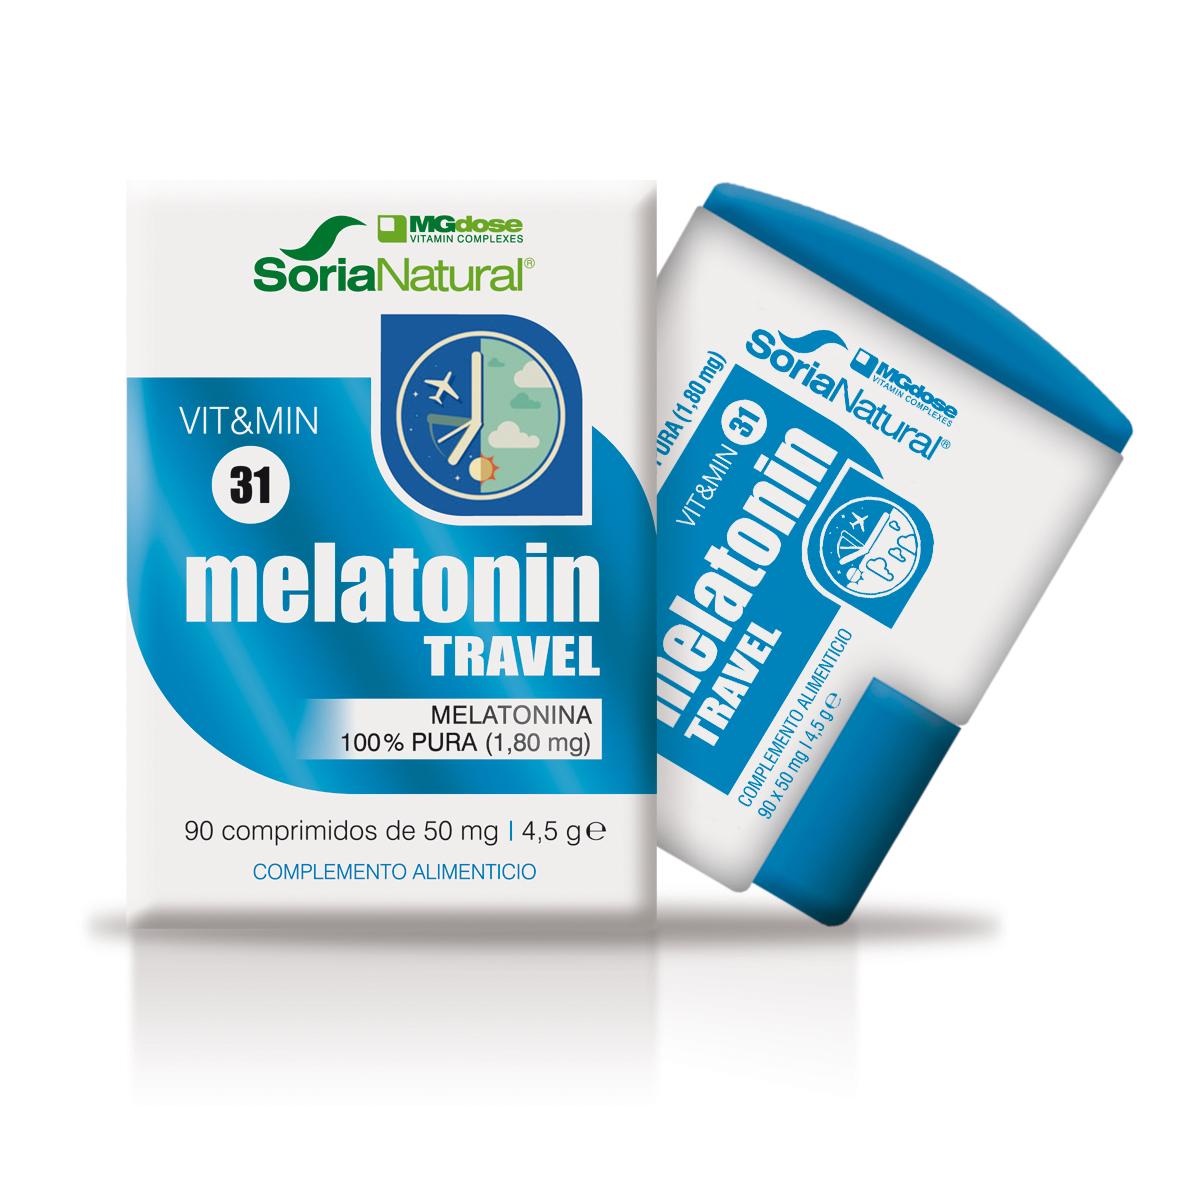 vit&min-31-melatonin-travel-soria-natural